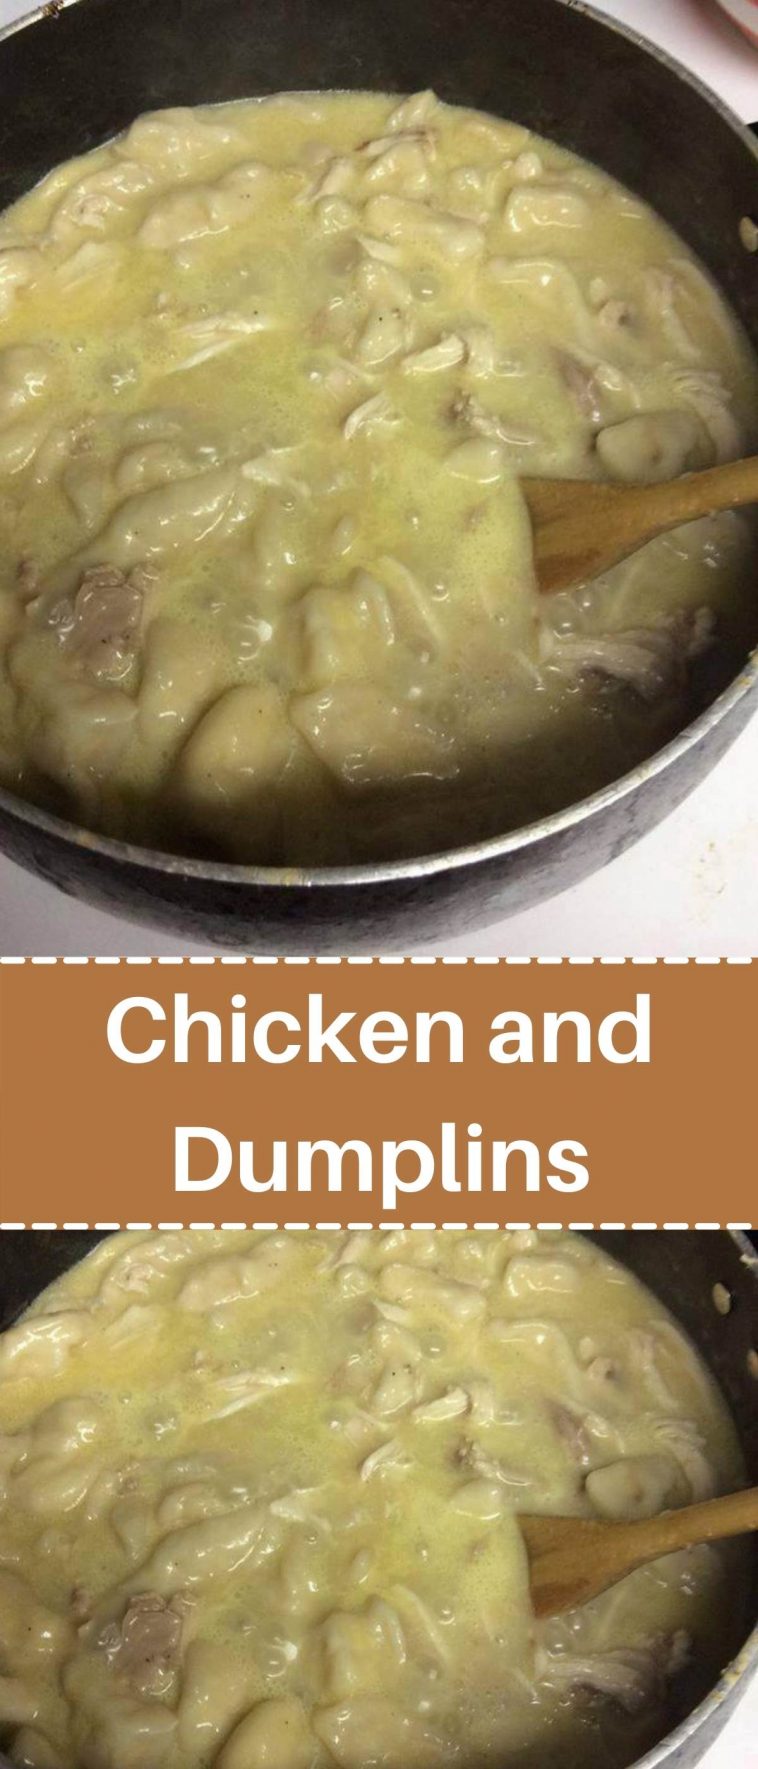 Chicken and Dumplins